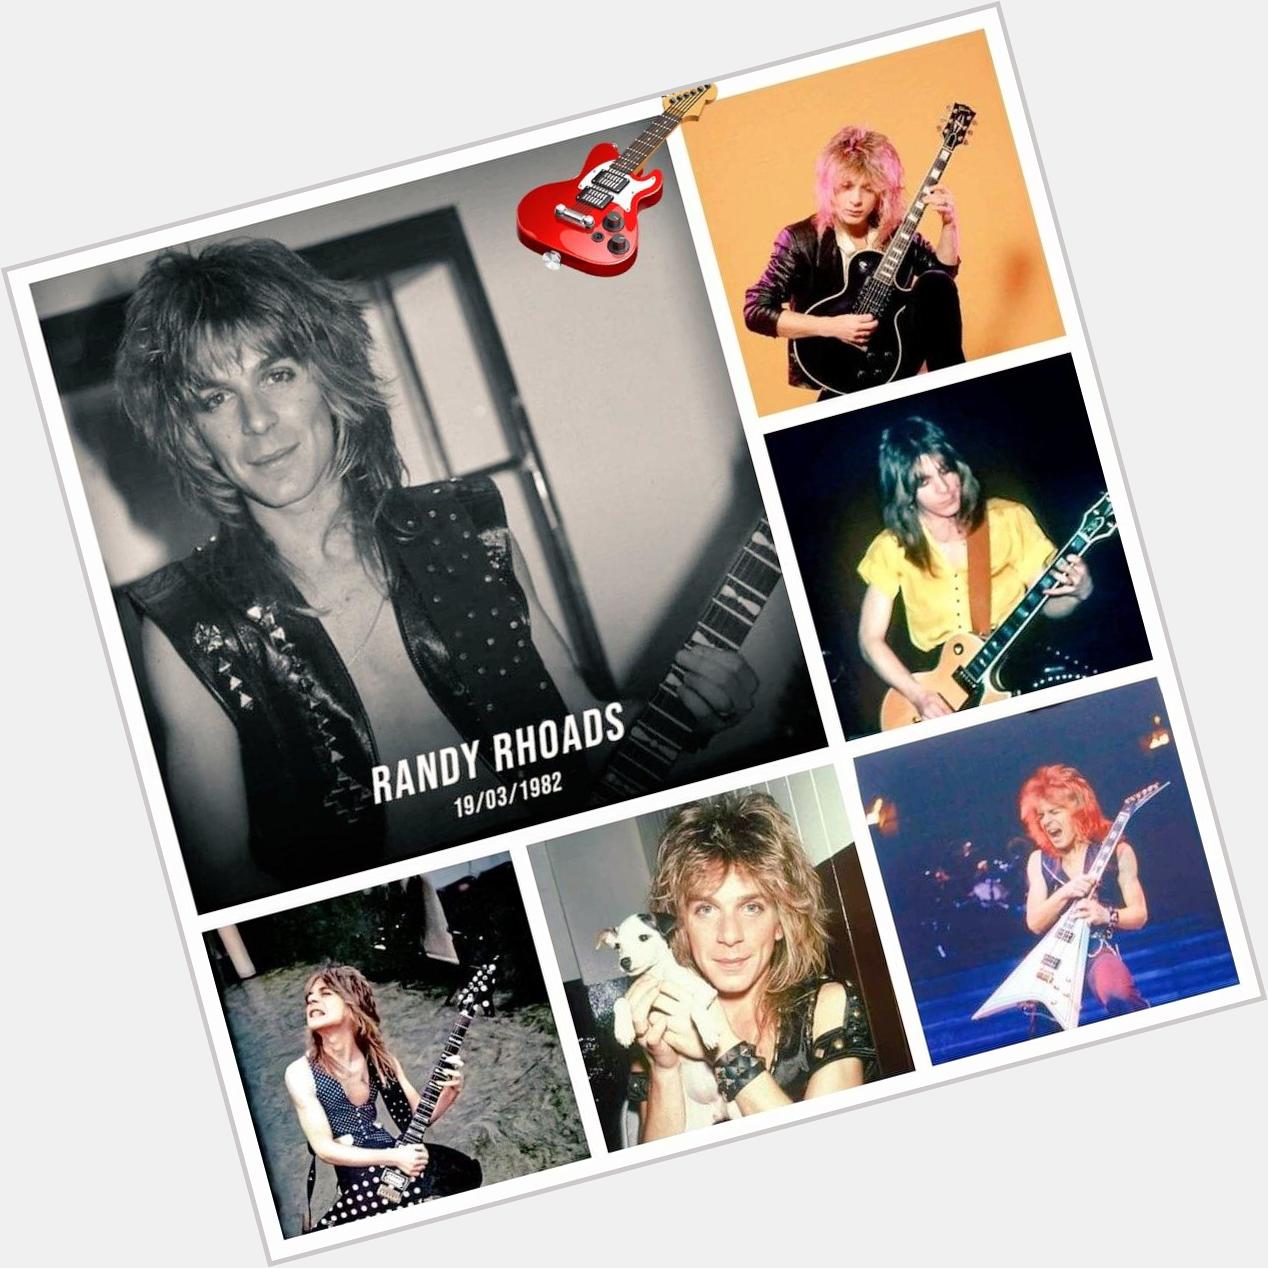 Happy heavenly birthday  RANDY RHOADS! December 6, 1956 
March 19, 1982
Gone, but never forgotten! 